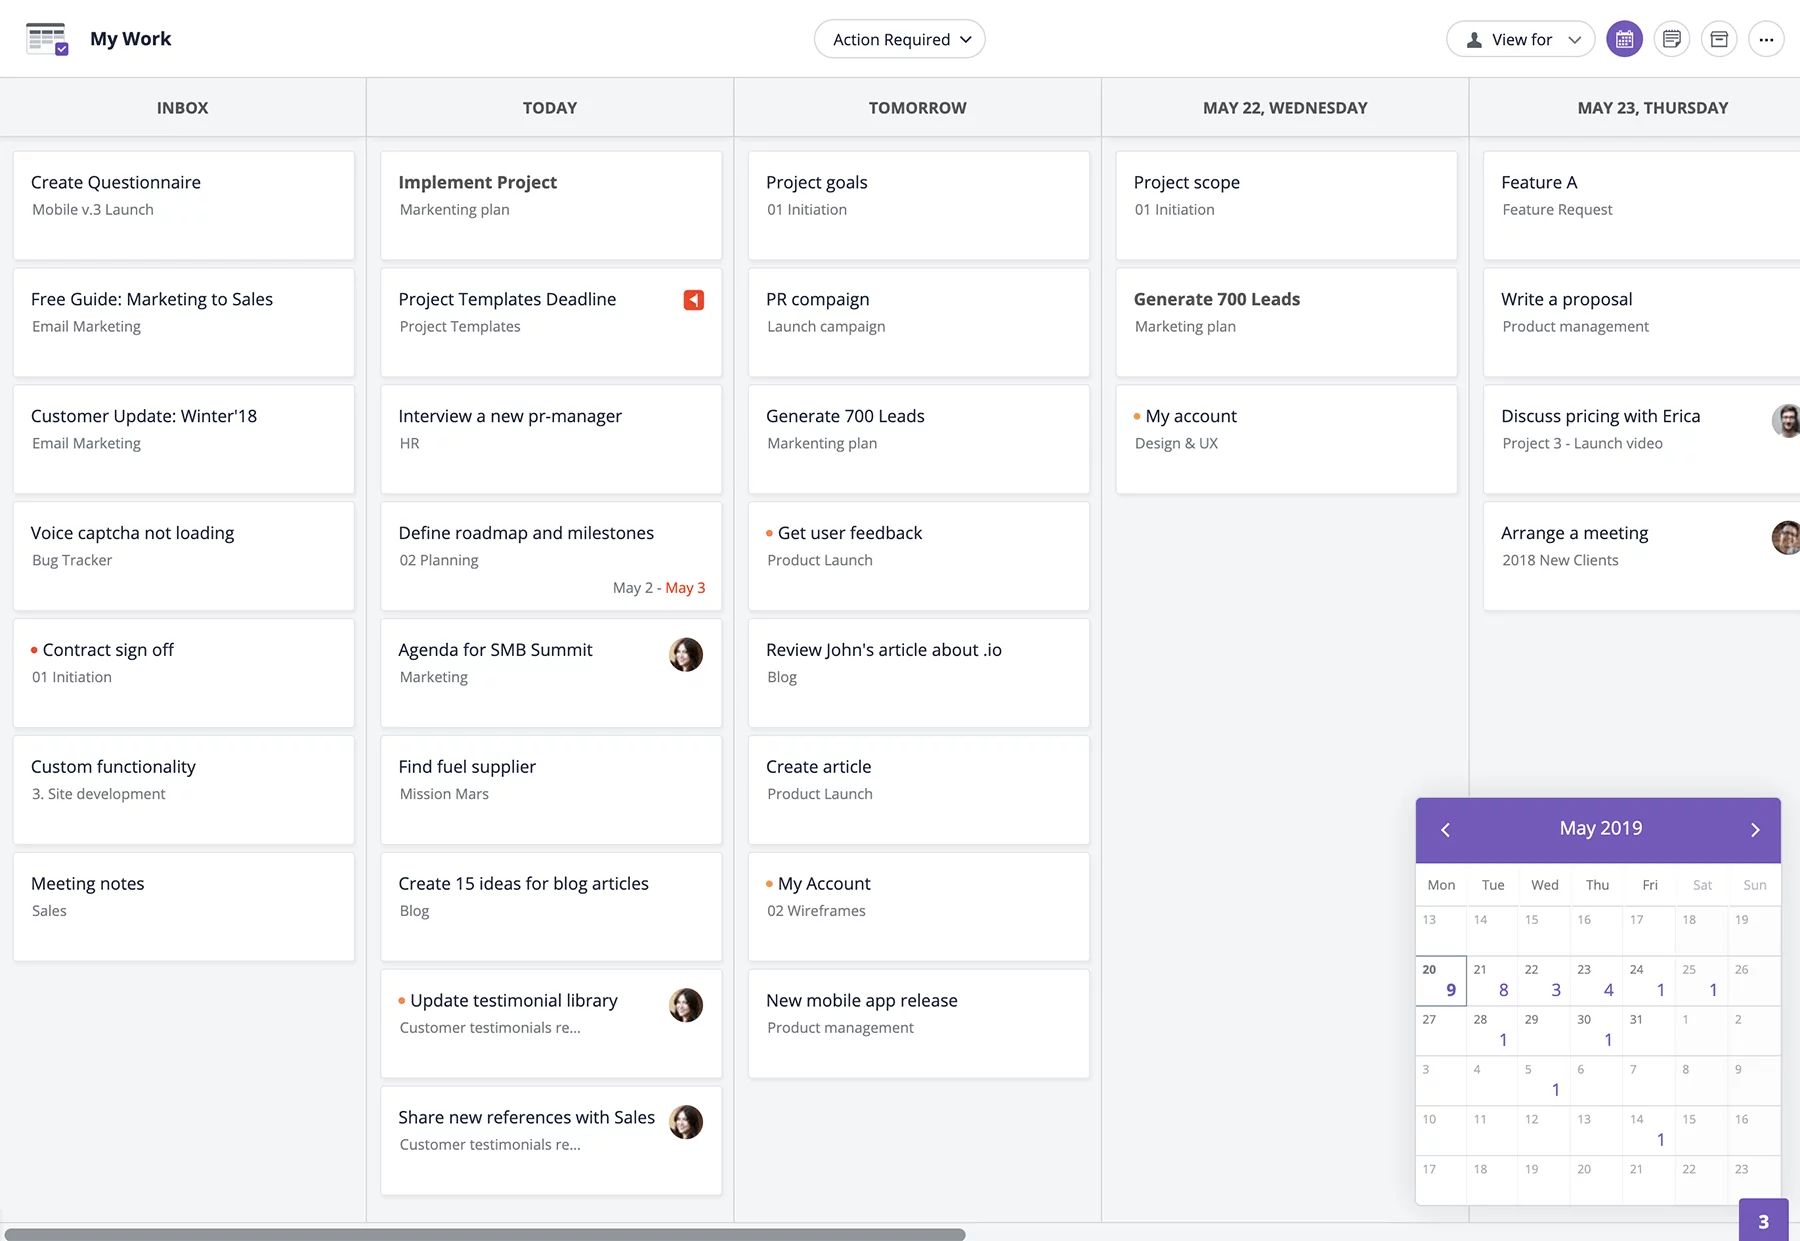 GoodDay dashboard - employee scheduling software